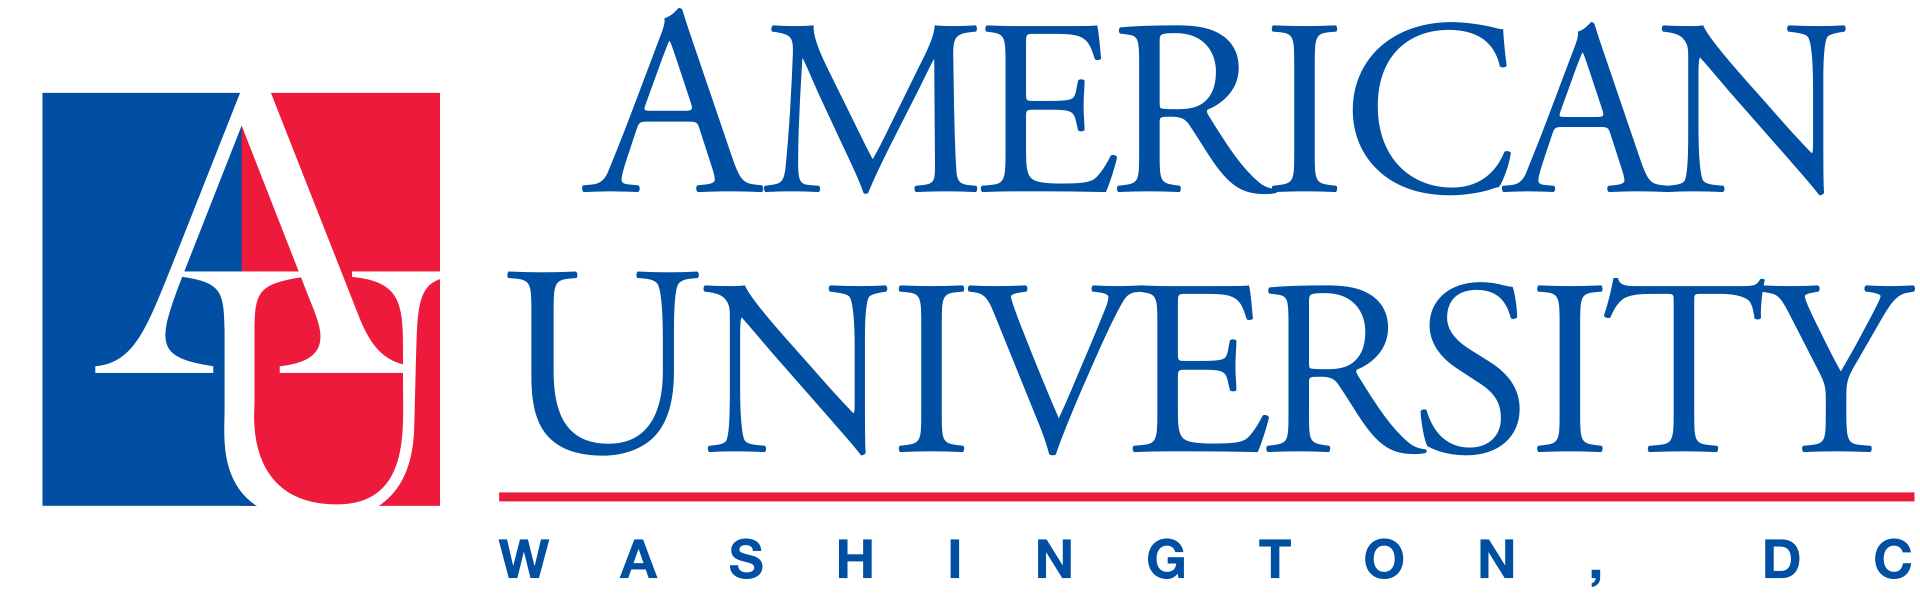 American University logo, By American University - http://www.美国.edu, 公共领域, http://commons.维基.org/w/index.php?curid = 54500563 "